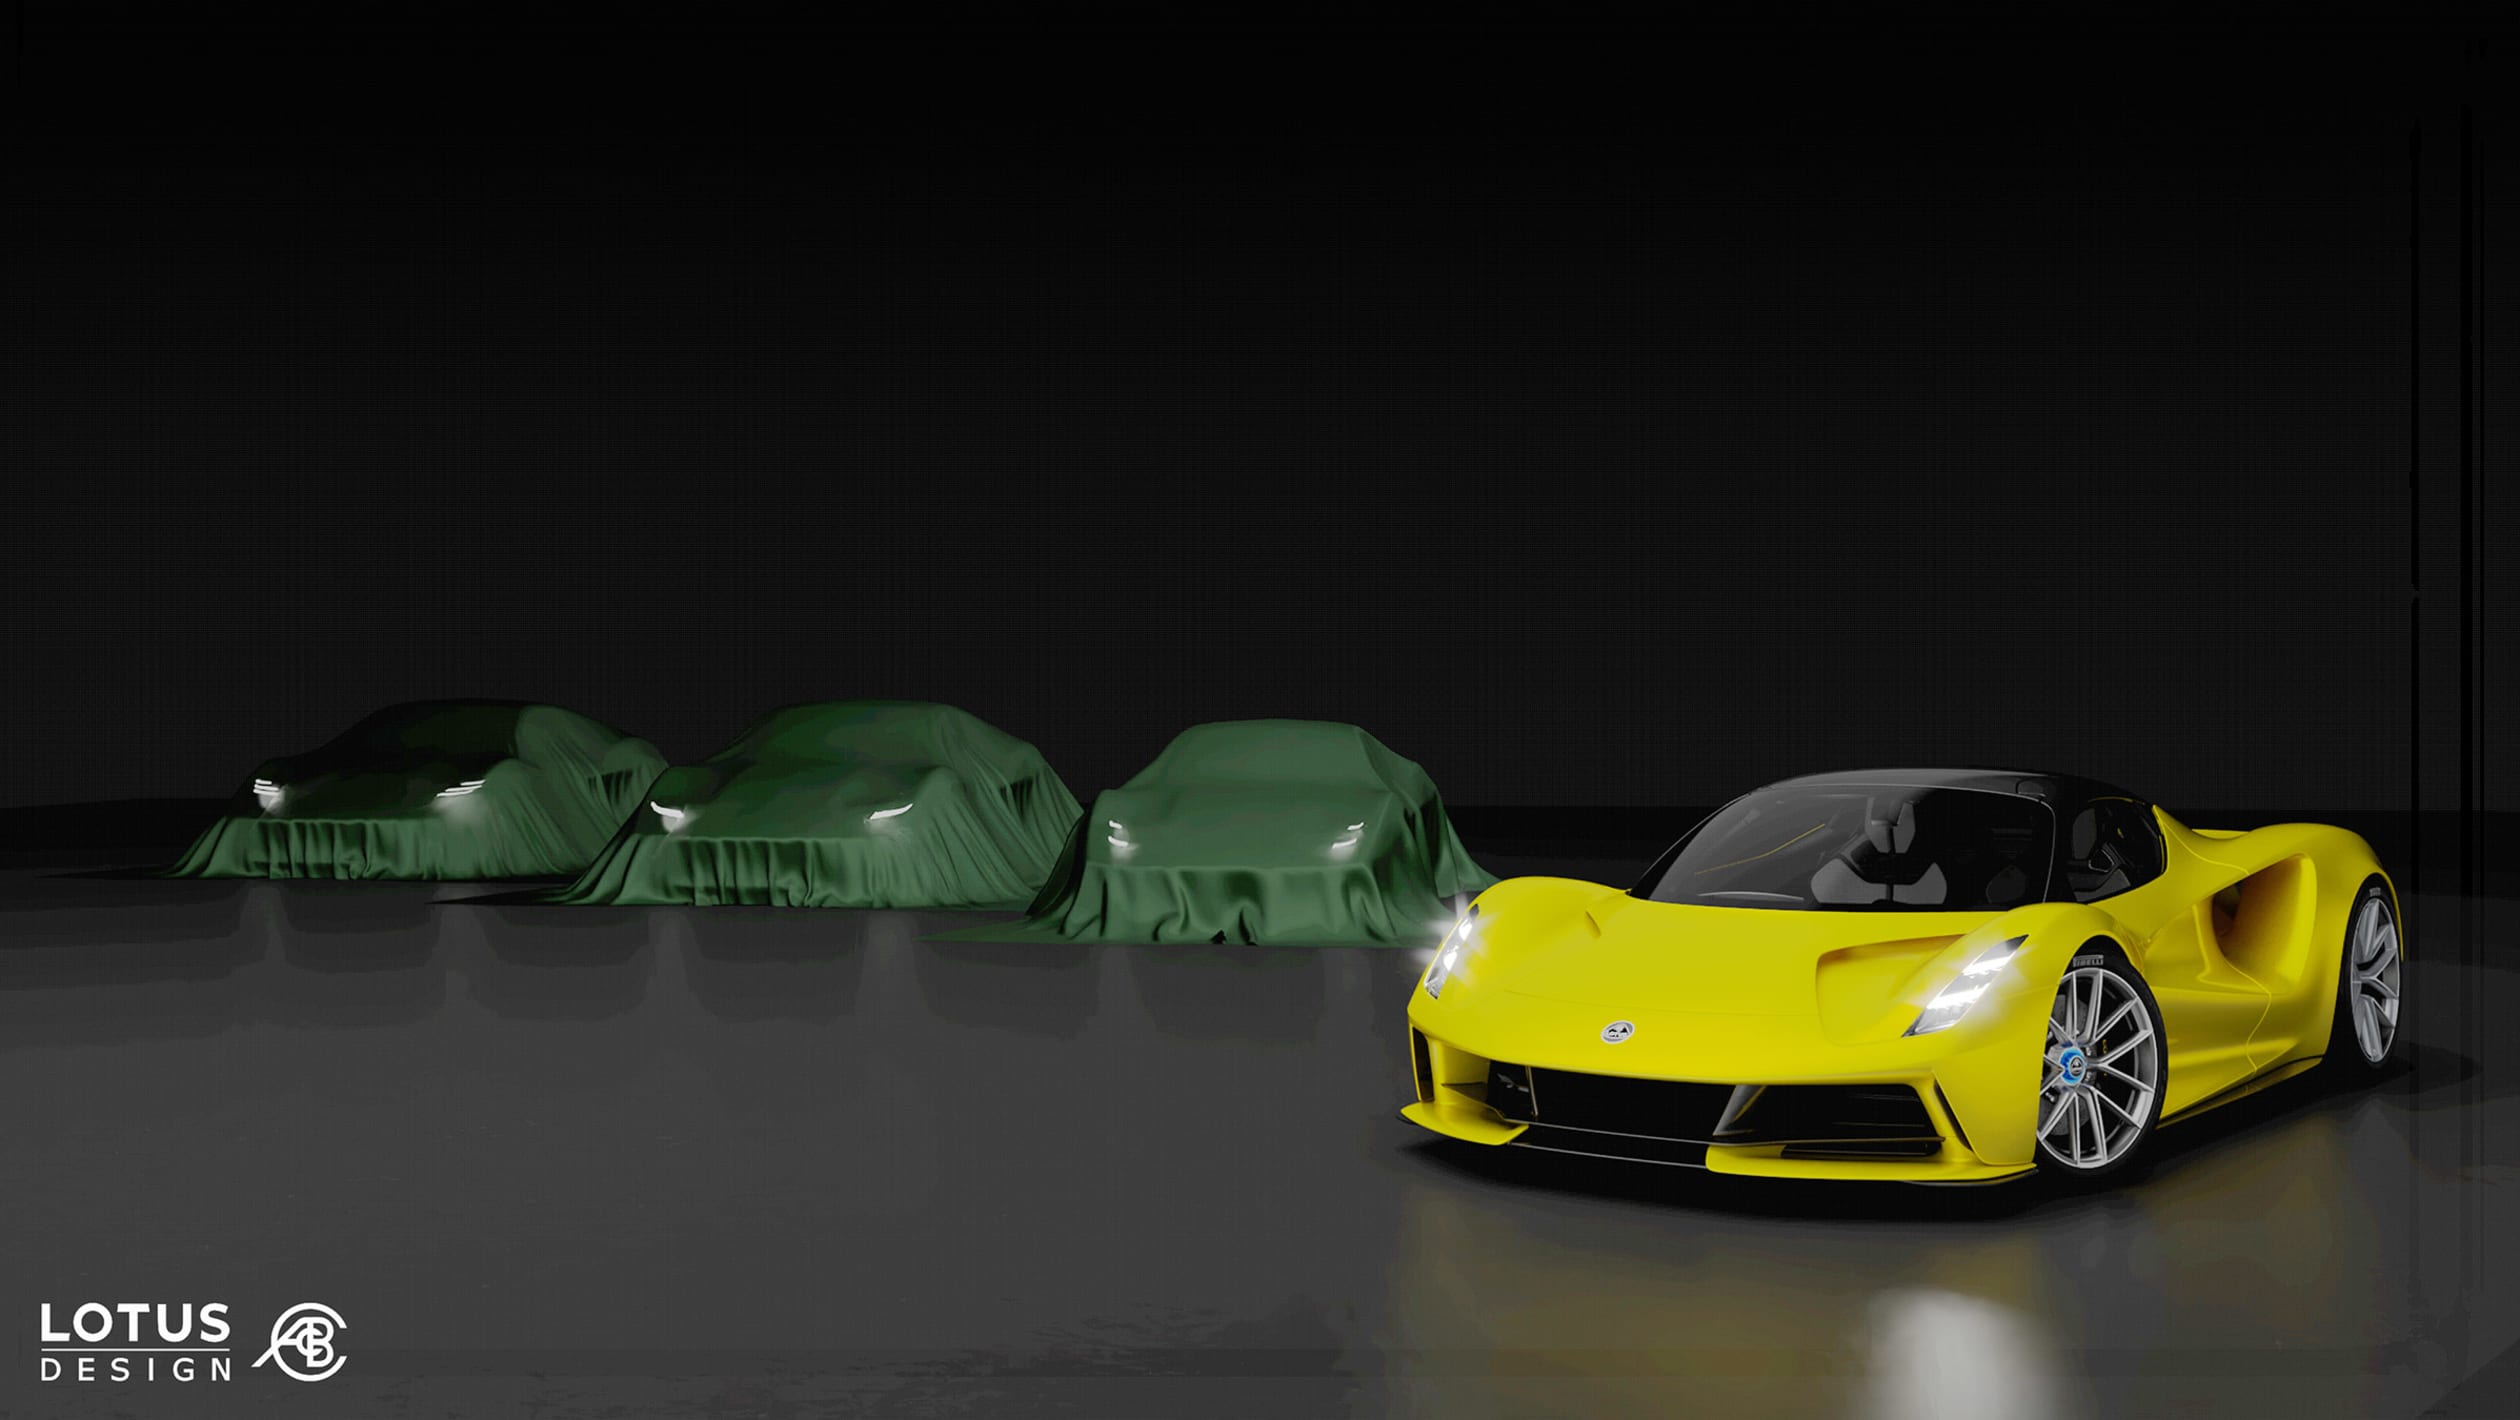 aria-label="Lotus Sports Car Series"